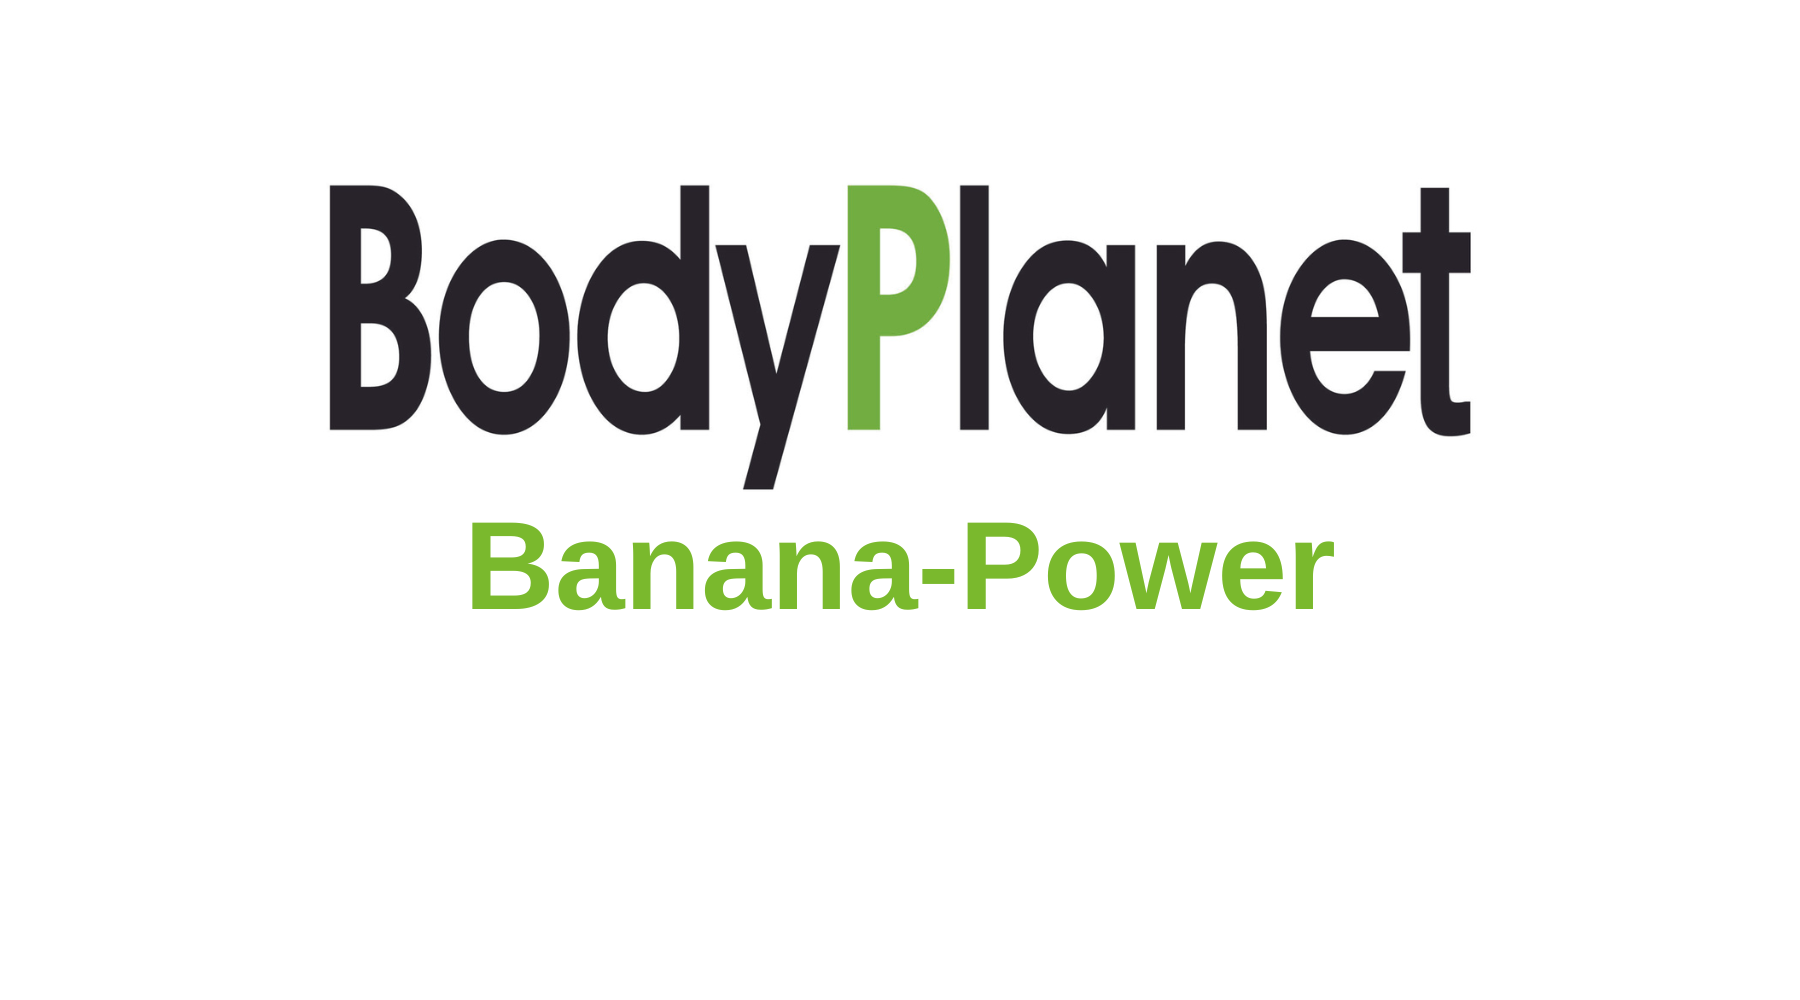 Banana-Power